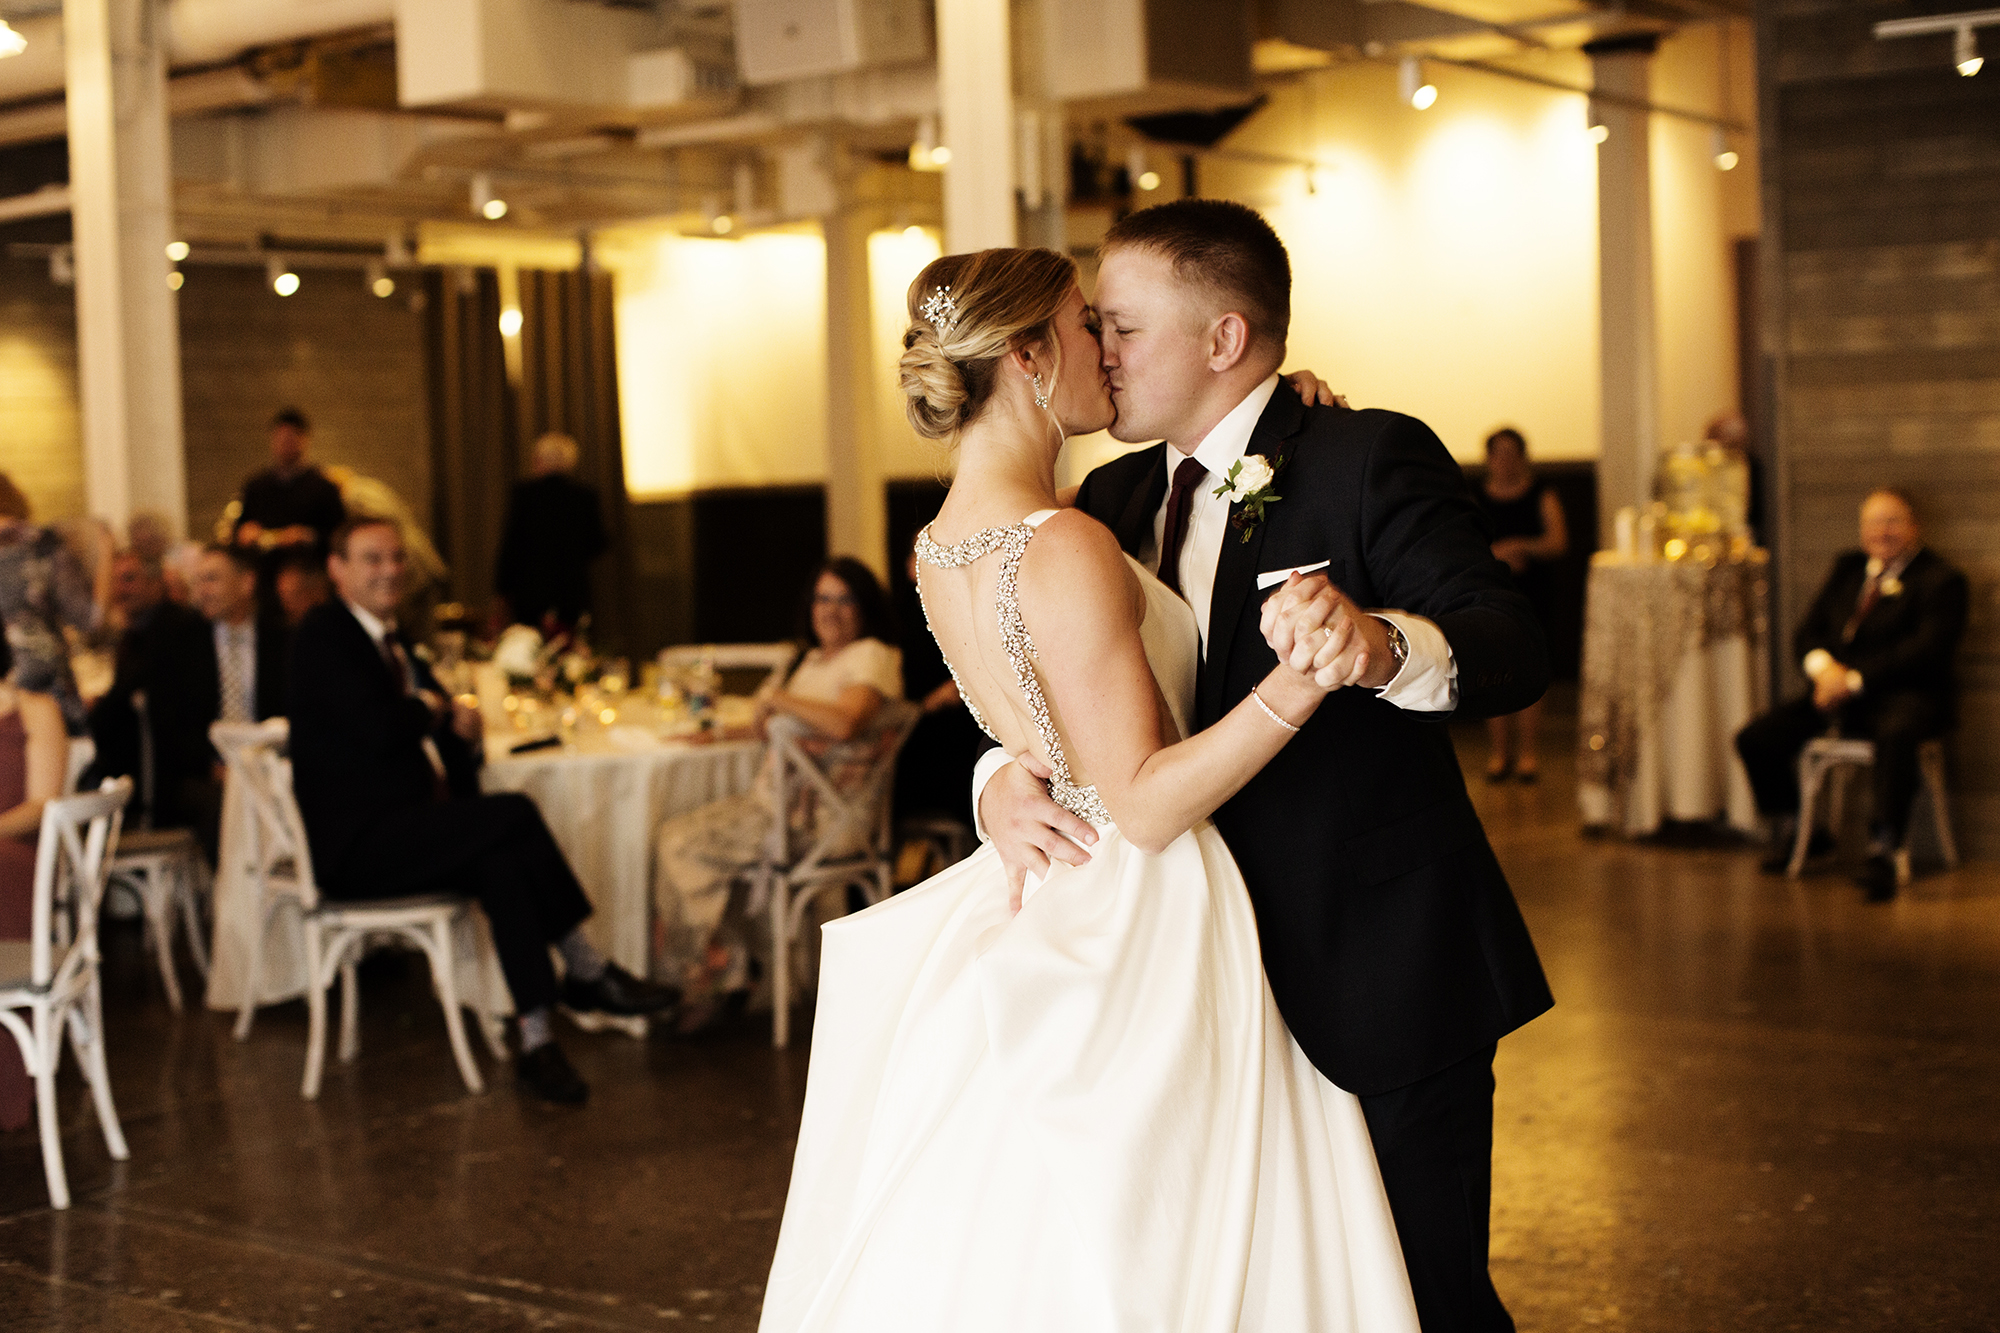 Machine Shop Wedding Photos | Photography by Photogen Inc. | Eliesa Johnson | Based in Minneapolis, Minnesota